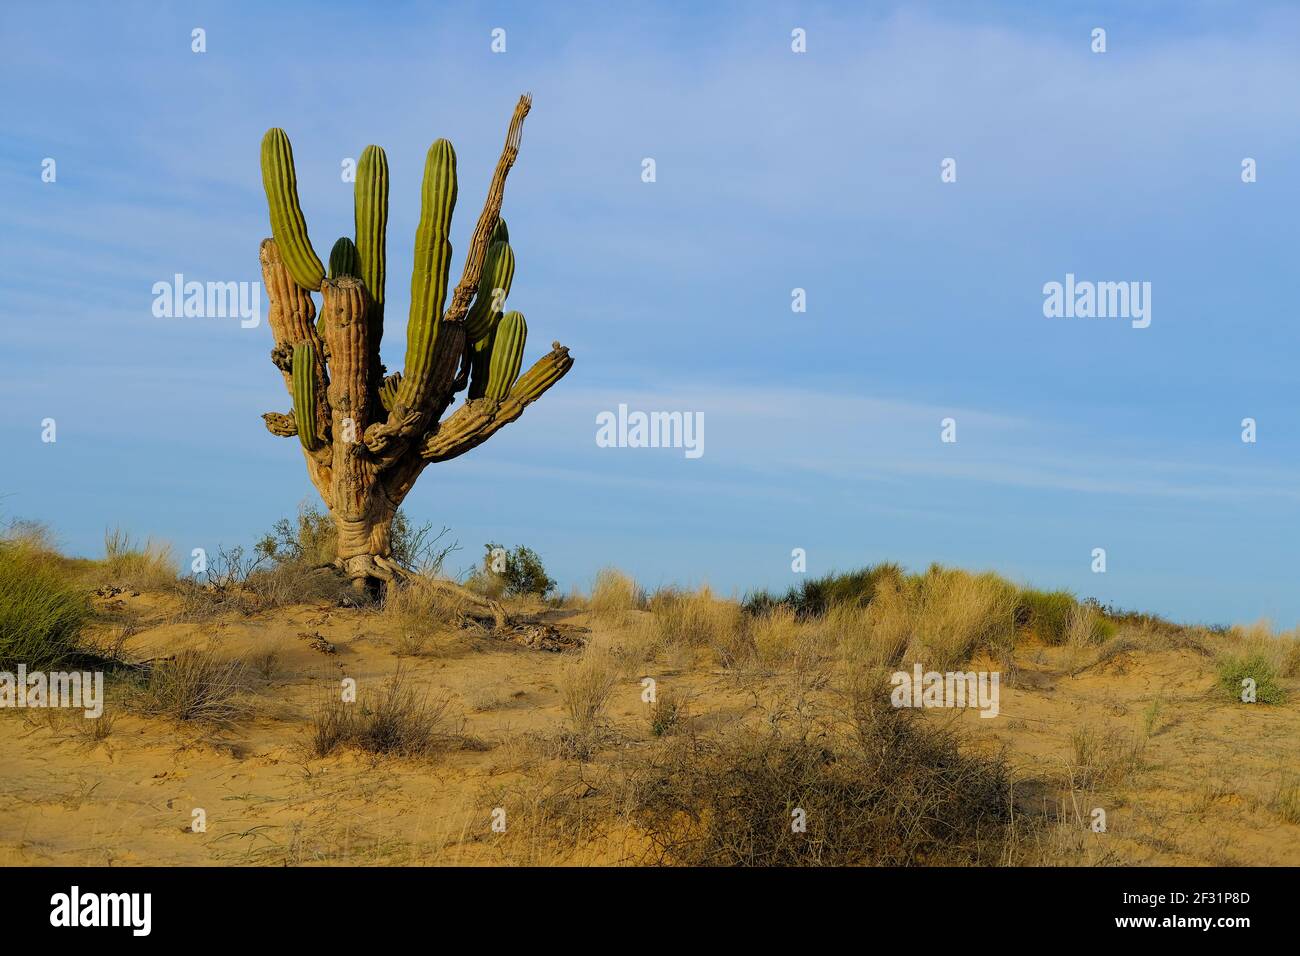 Pachycereus pringlei, il cardon gigante messicano, o cactus elefante che mostra le sue radici, Valle dei Giganti, San Felipe, Baja California, Messico. Foto Stock